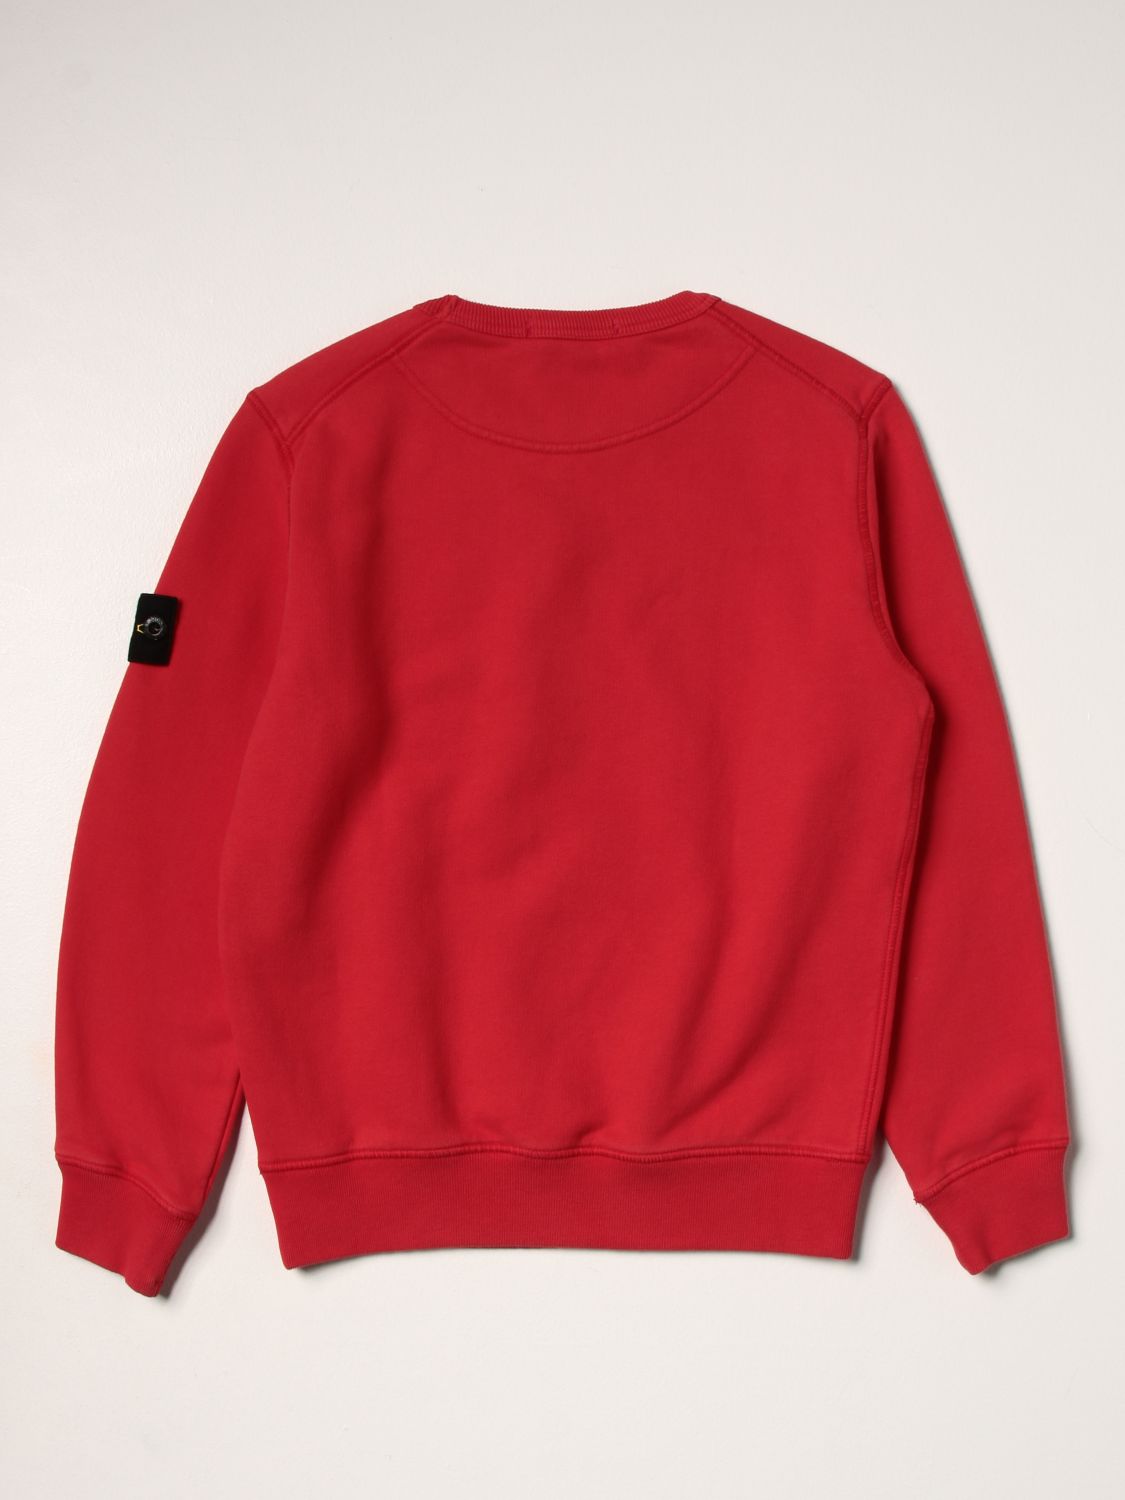 Document De slaapkamer schoonmaken alias STONE ISLAND JUNIOR: sweater for boys - Red | Stone Island Junior sweater  61340 online on GIGLIO.COM